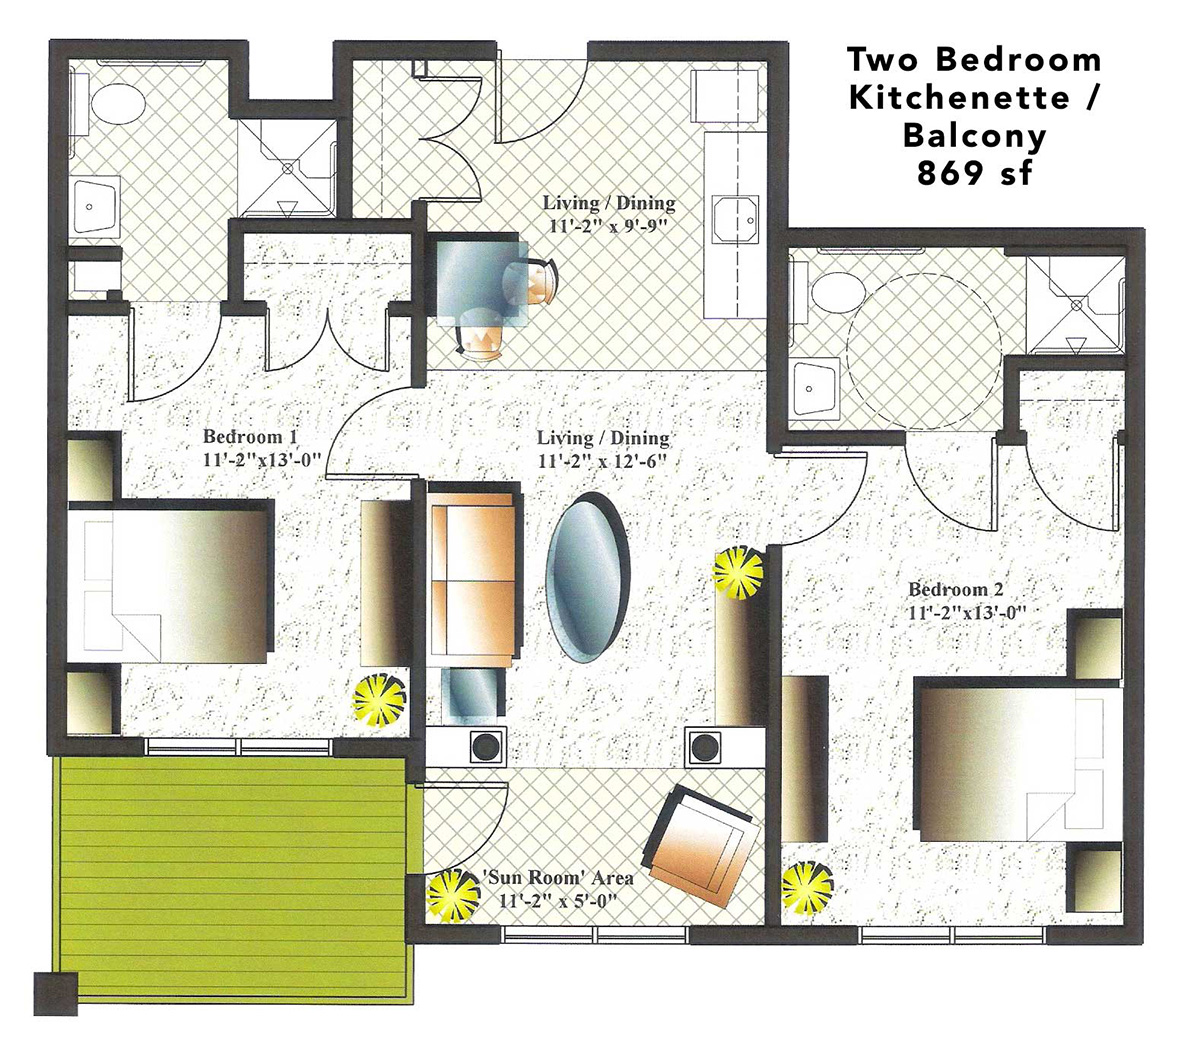 Two Bedroom / Kitchenette / Balcony 869 sf